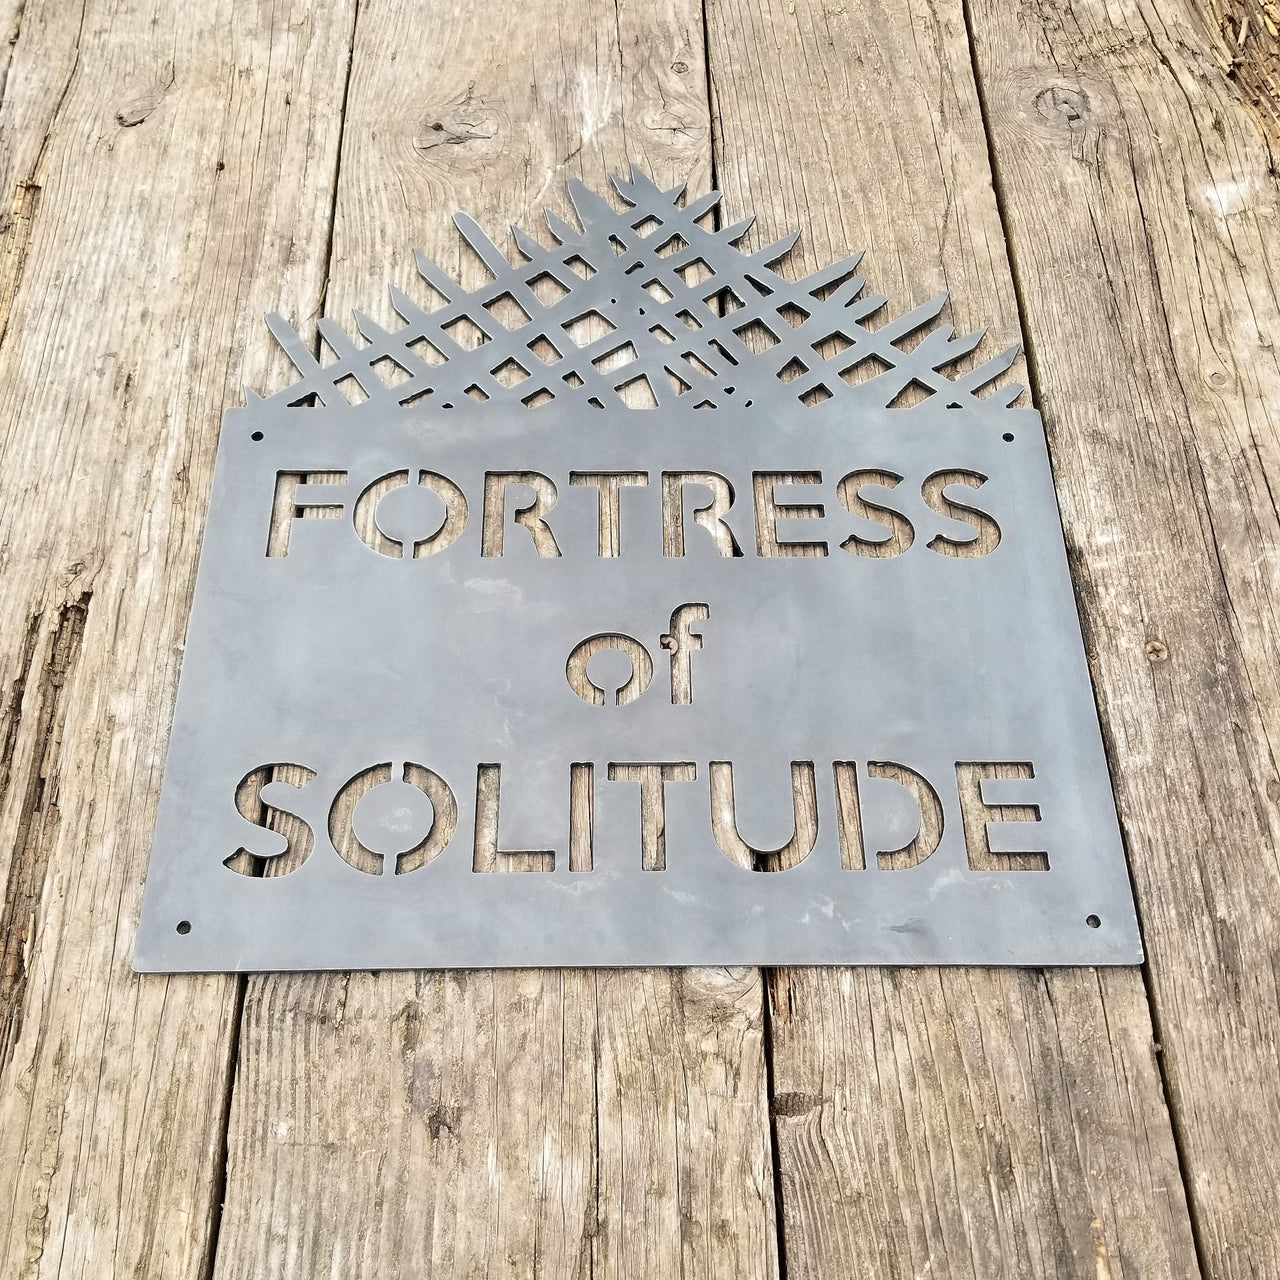 Fortress of Solitude - Metal Man Cave Sign - Fan Art, Superman Tribute, Comic Decor